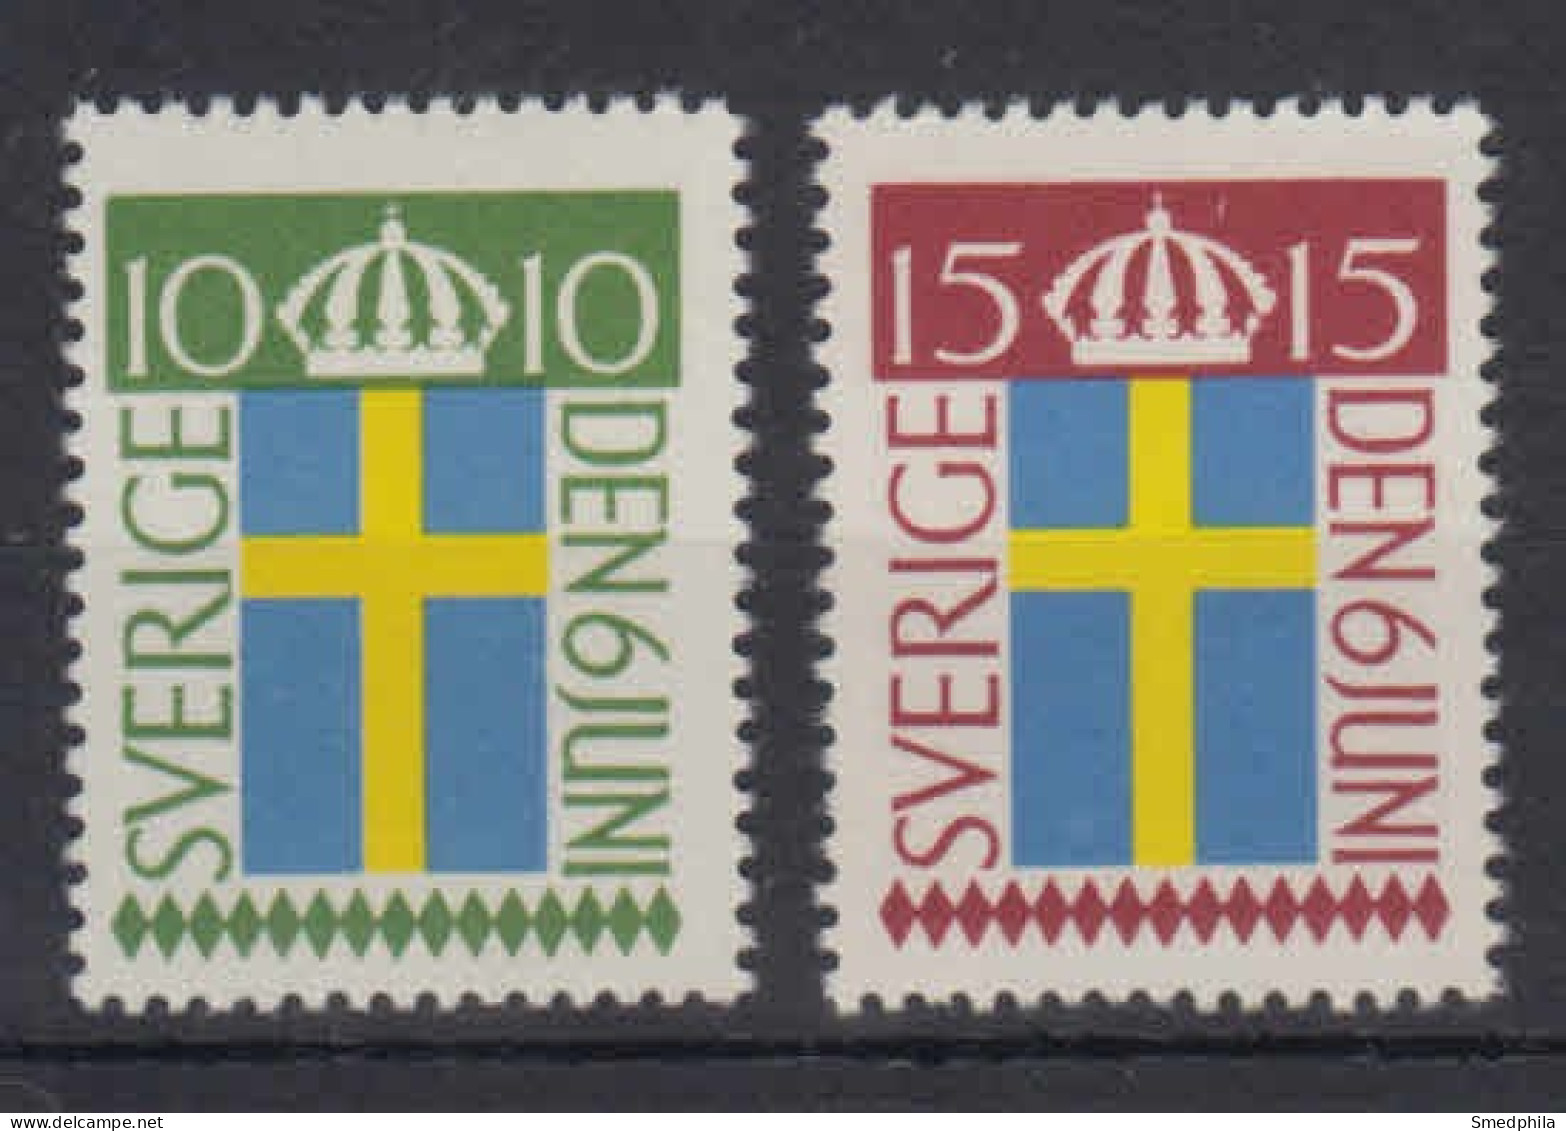 Sweden 1955 - Michel 404-405 MNH ** - Unused Stamps